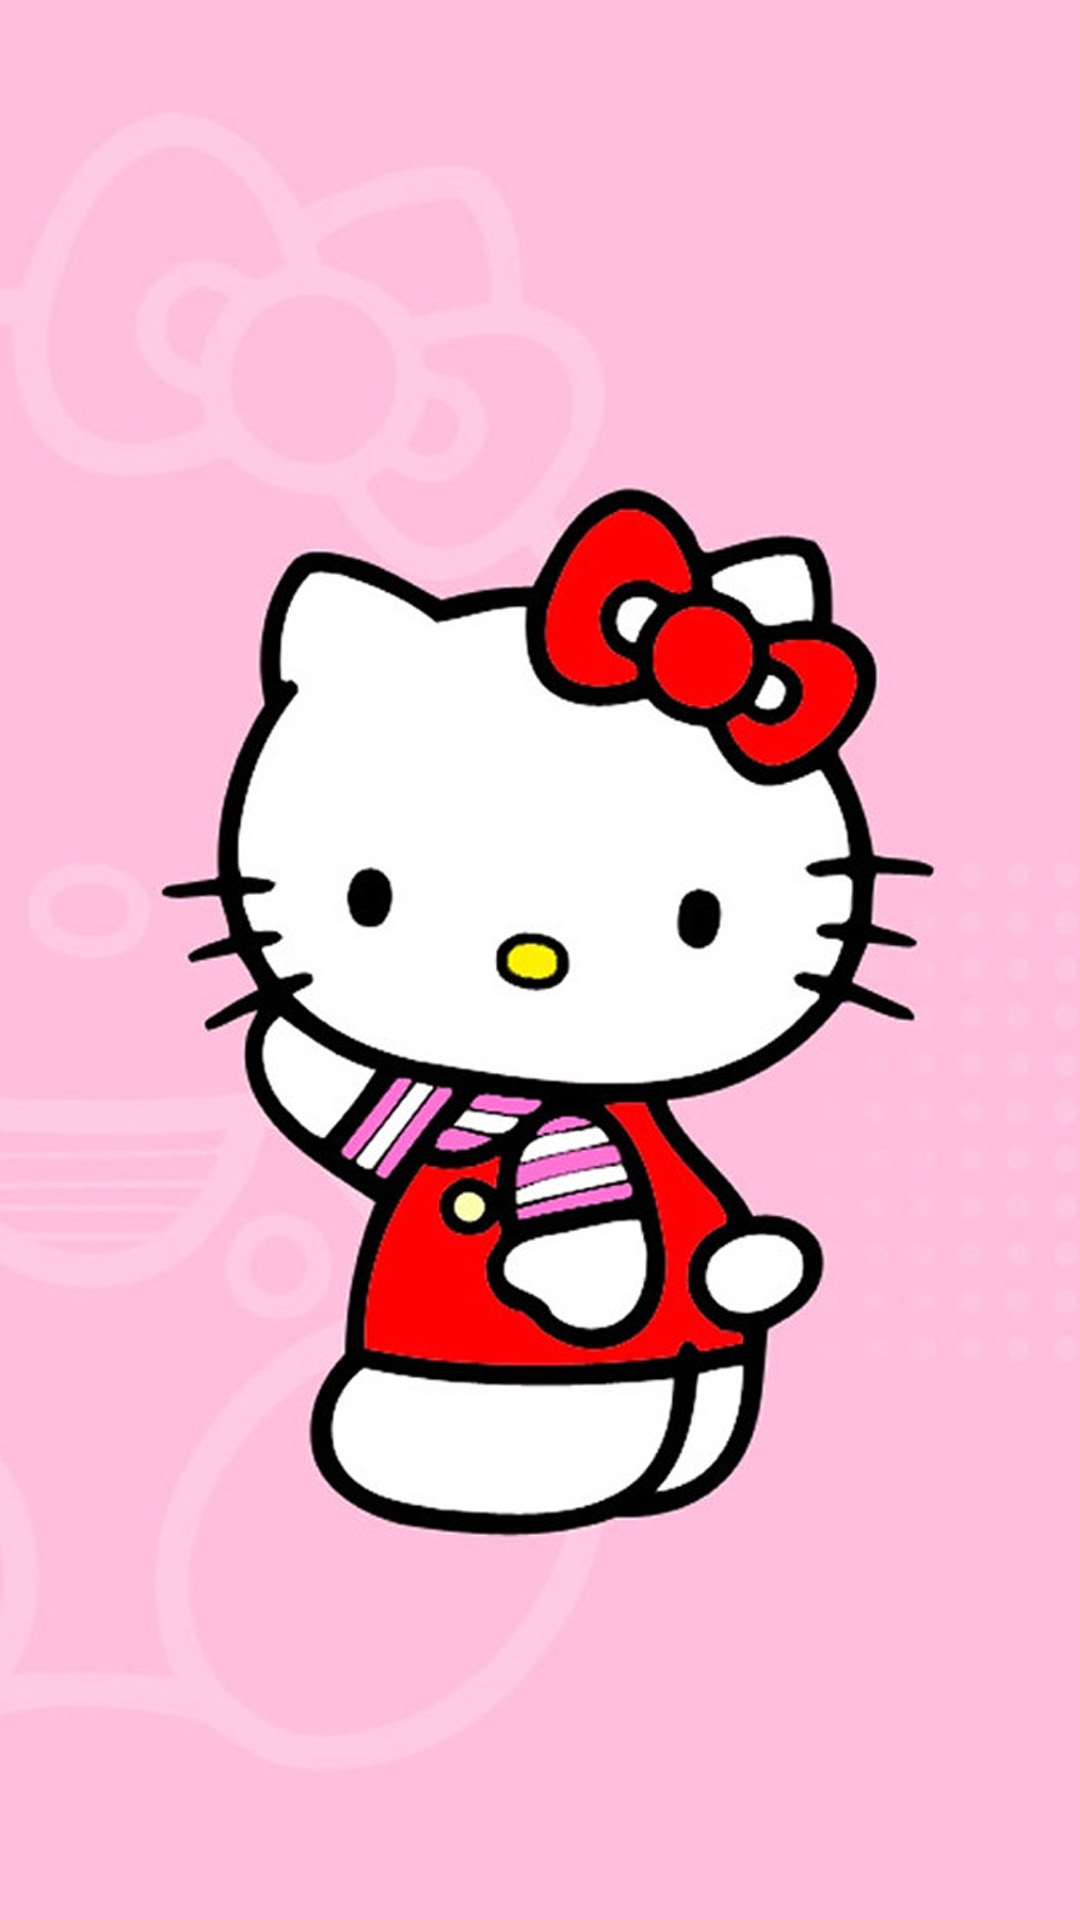 Cute Hello Kitty iPhone Wallpaper